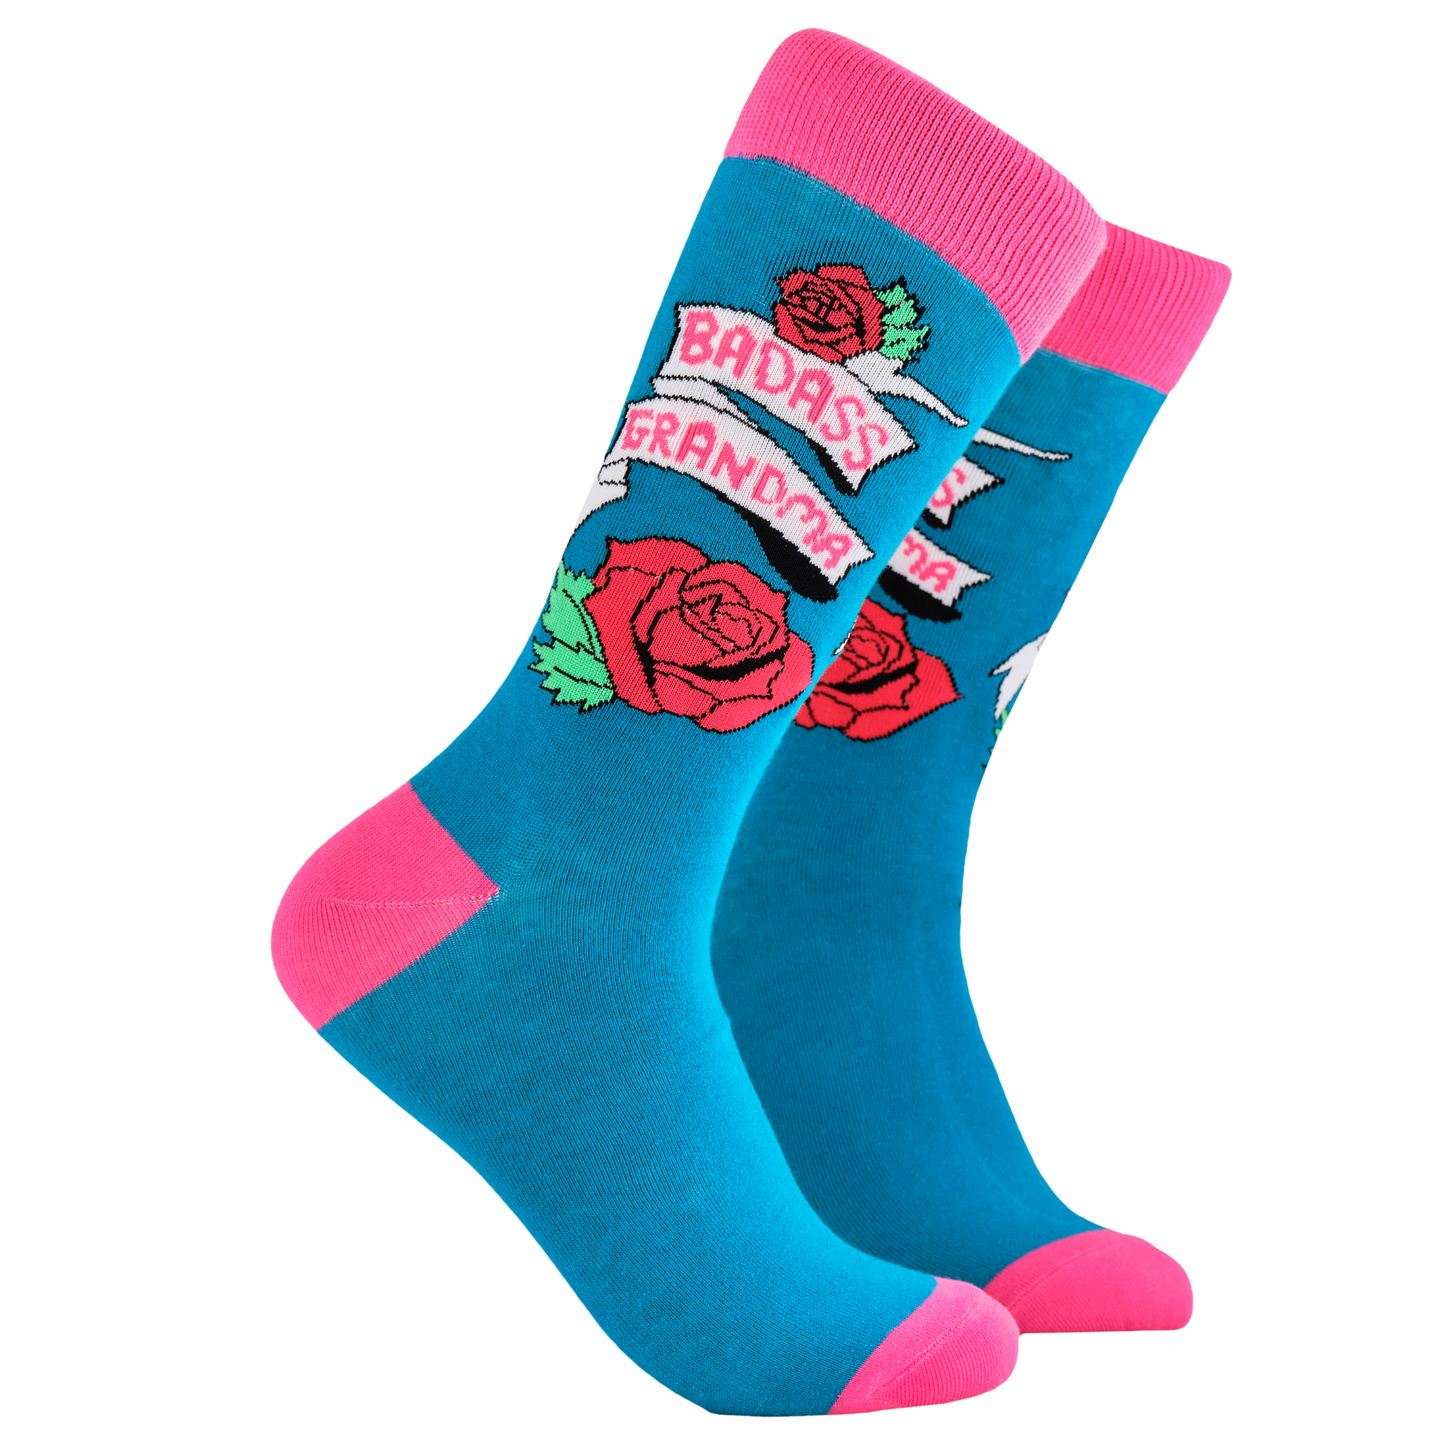 Badass Grandma Socks. A pair of socks depicting roses and the phrase Baddass Grandma. Blue legs, pink cuff, heel and toe.